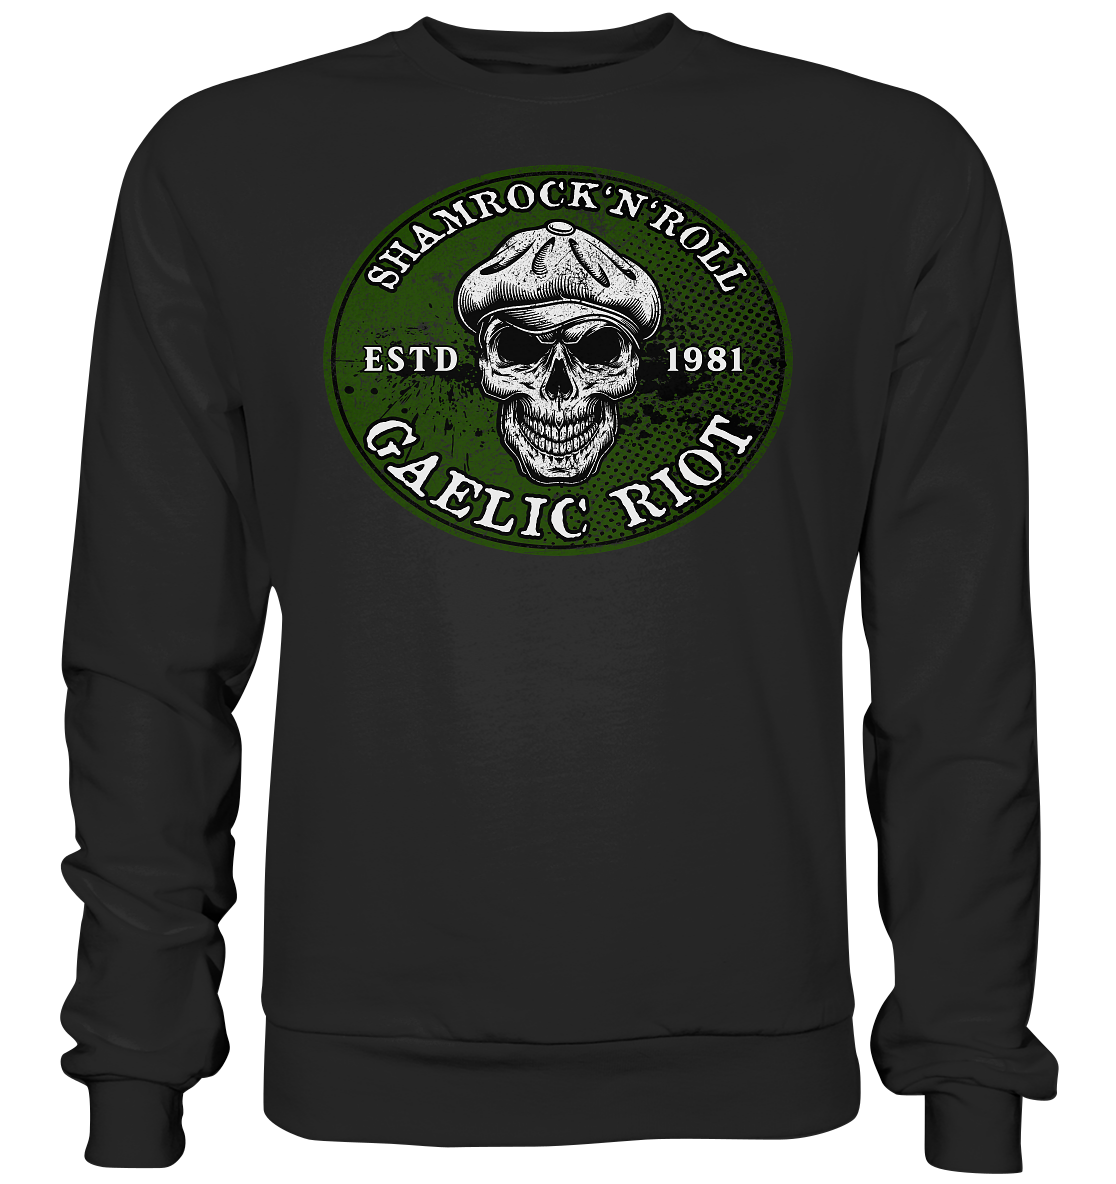 Shamrock And Roll "Skull / Gaelic Riot" - Premium Sweatshirt